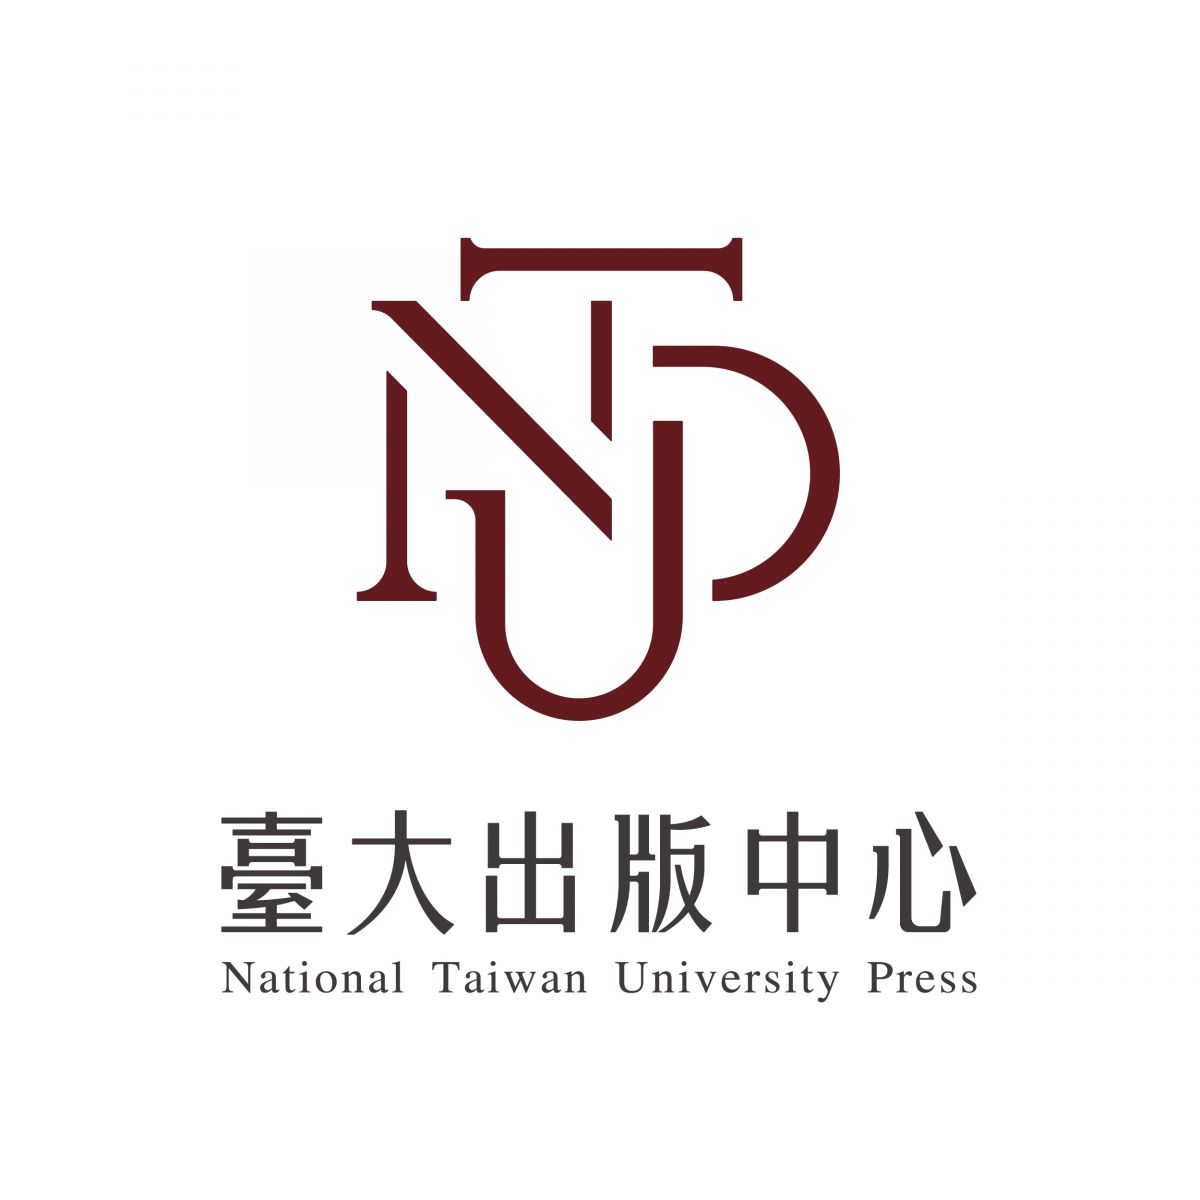 A New Milestone: New Logo Launch for National Taiwan University Press